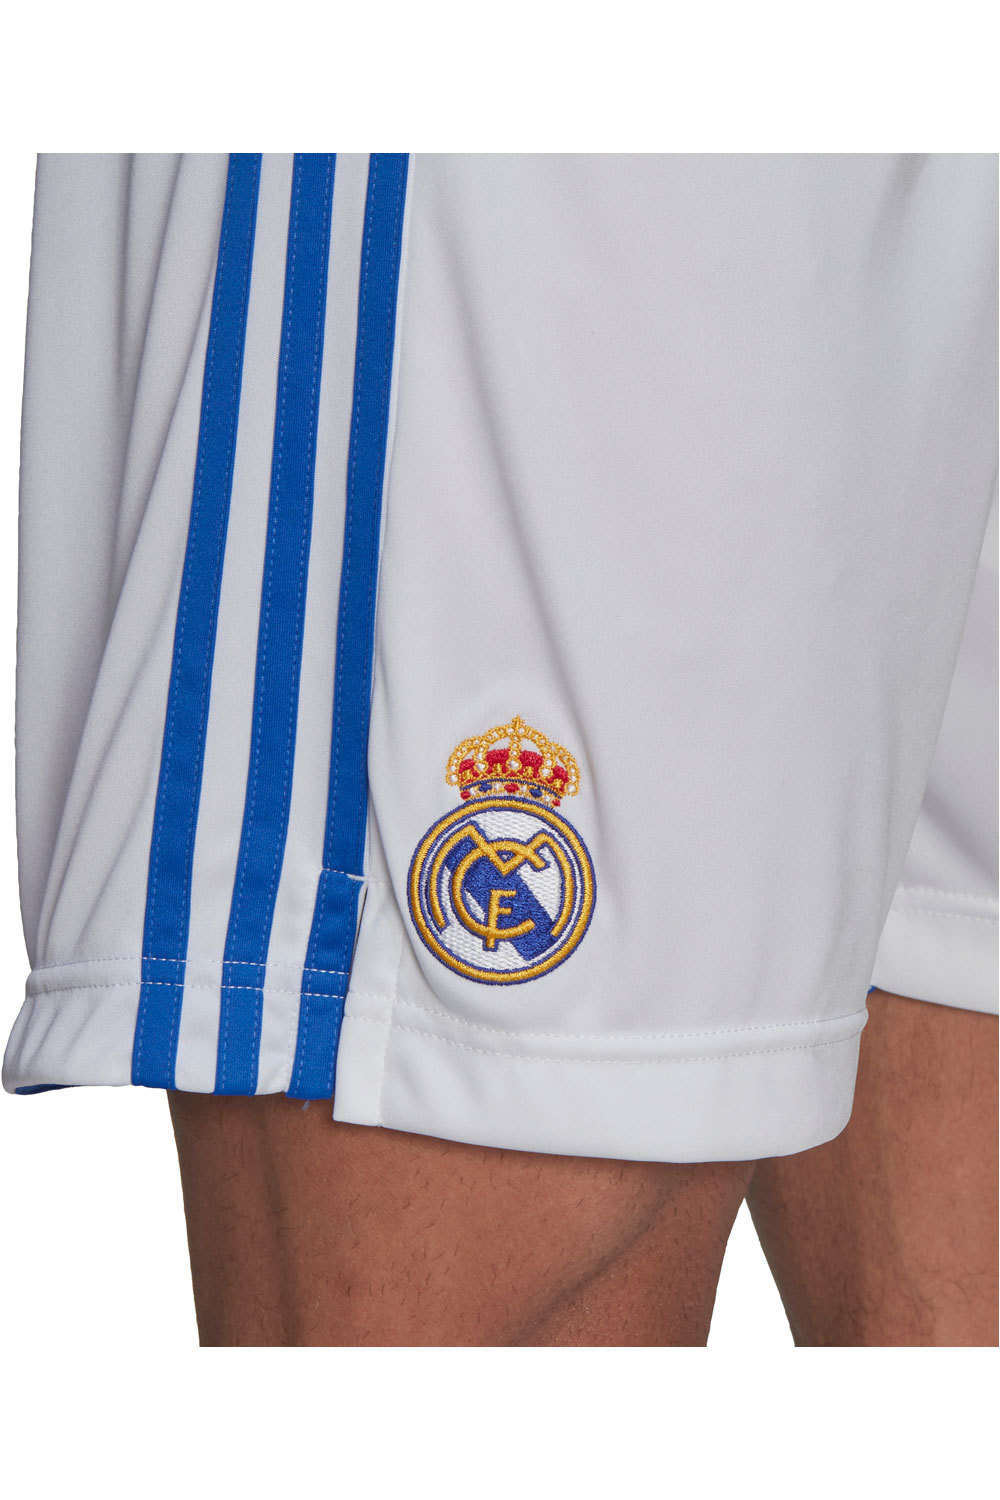 adidas pantalones fútbol oficiales R.MADRID 22 H SHO BL 03